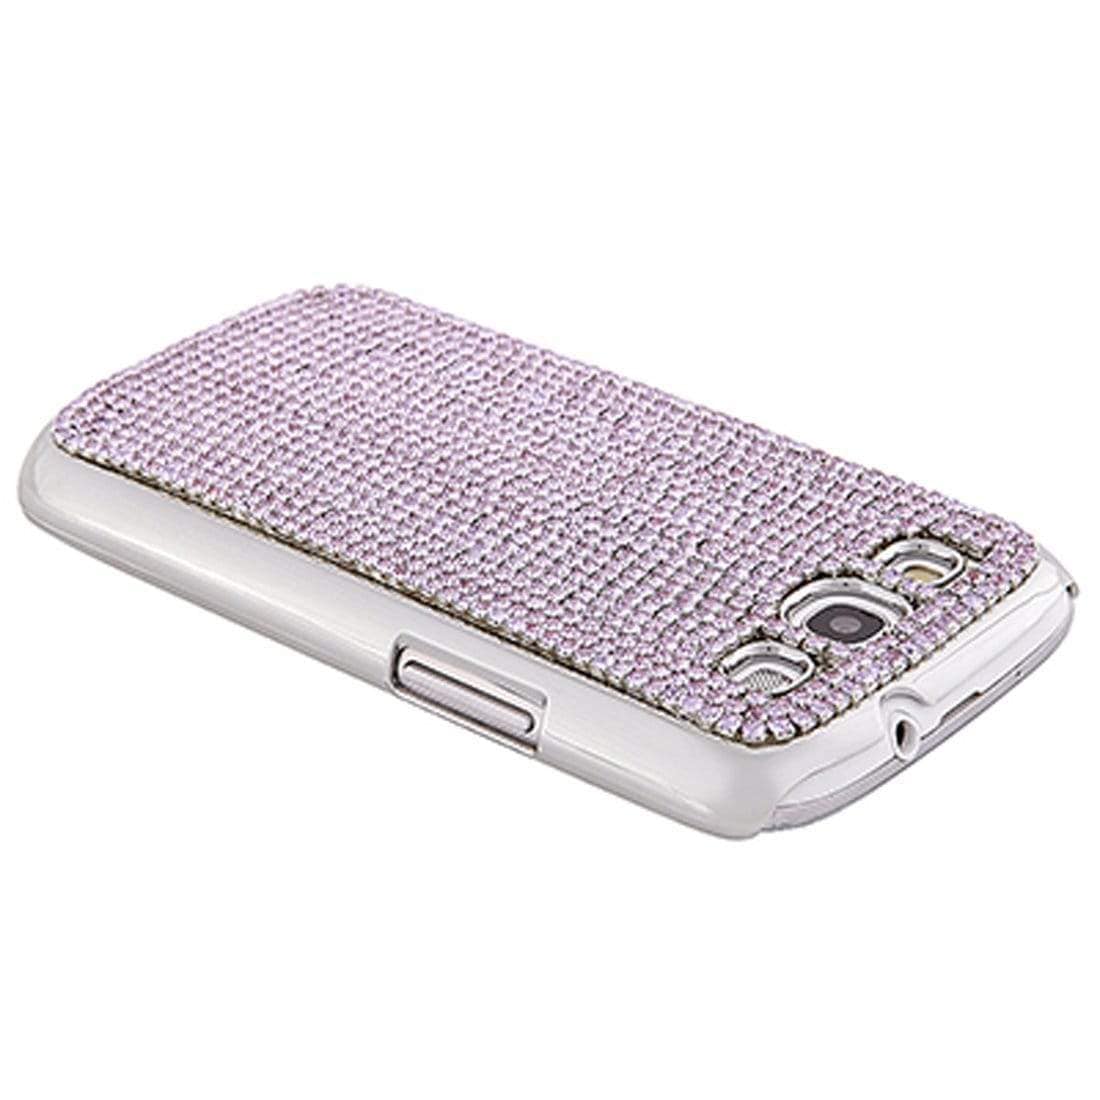 Kalifano Samsung Galaxy SPCG-005C-V - Galaxy S3 Cover with Violet Crystals SPCG-005C-V